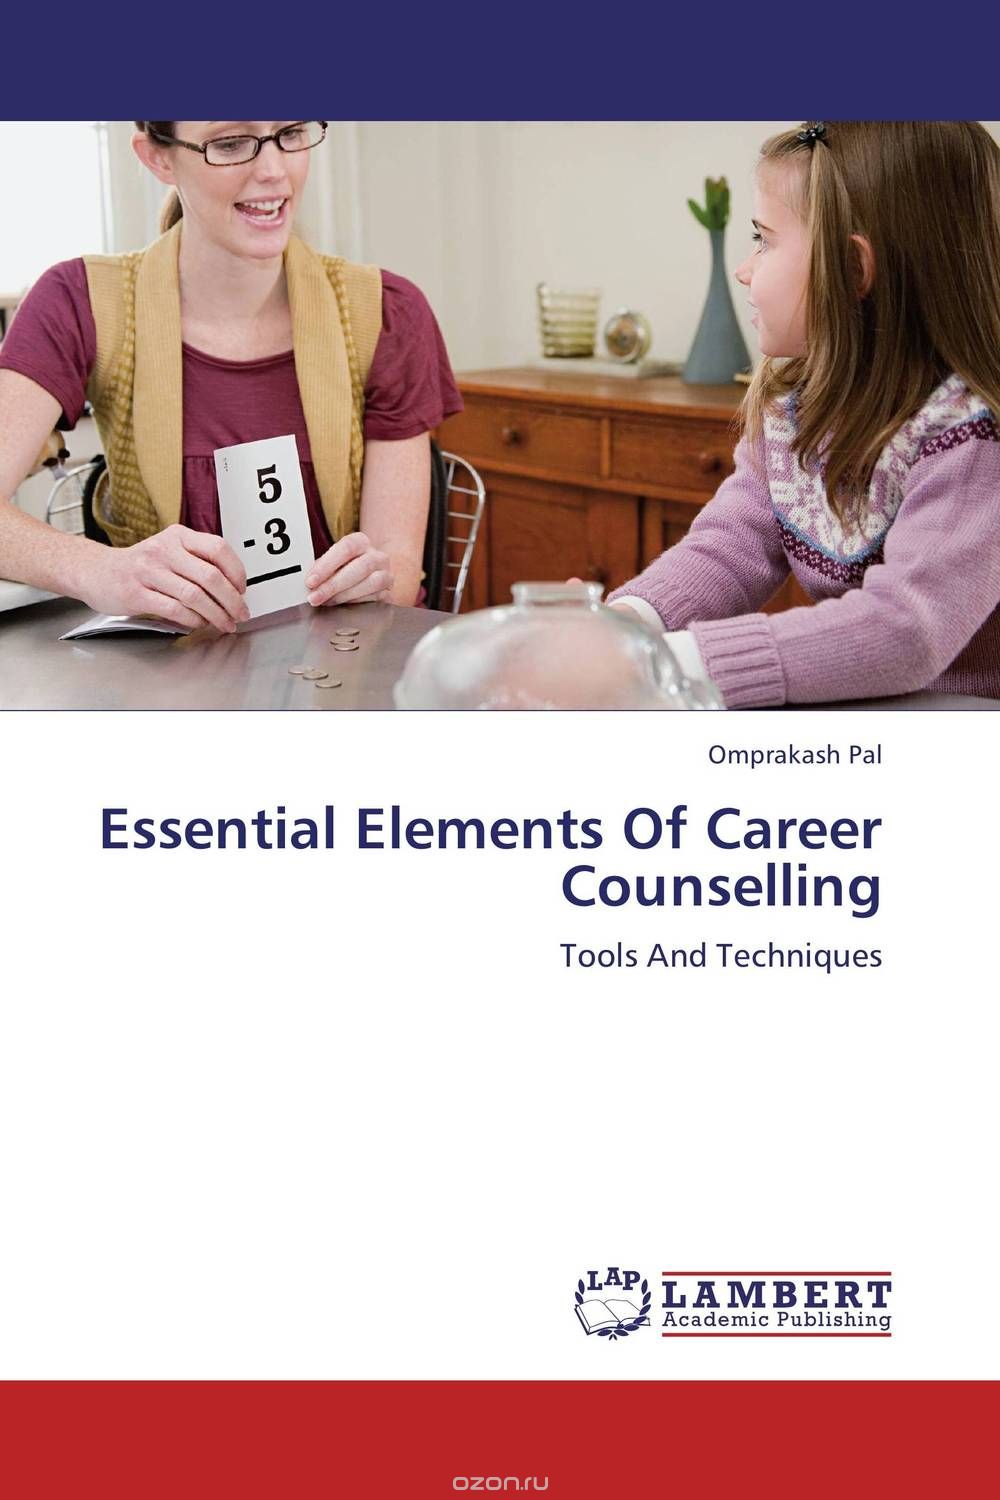 Скачать книгу "Essential Elements Of Career Counselling"